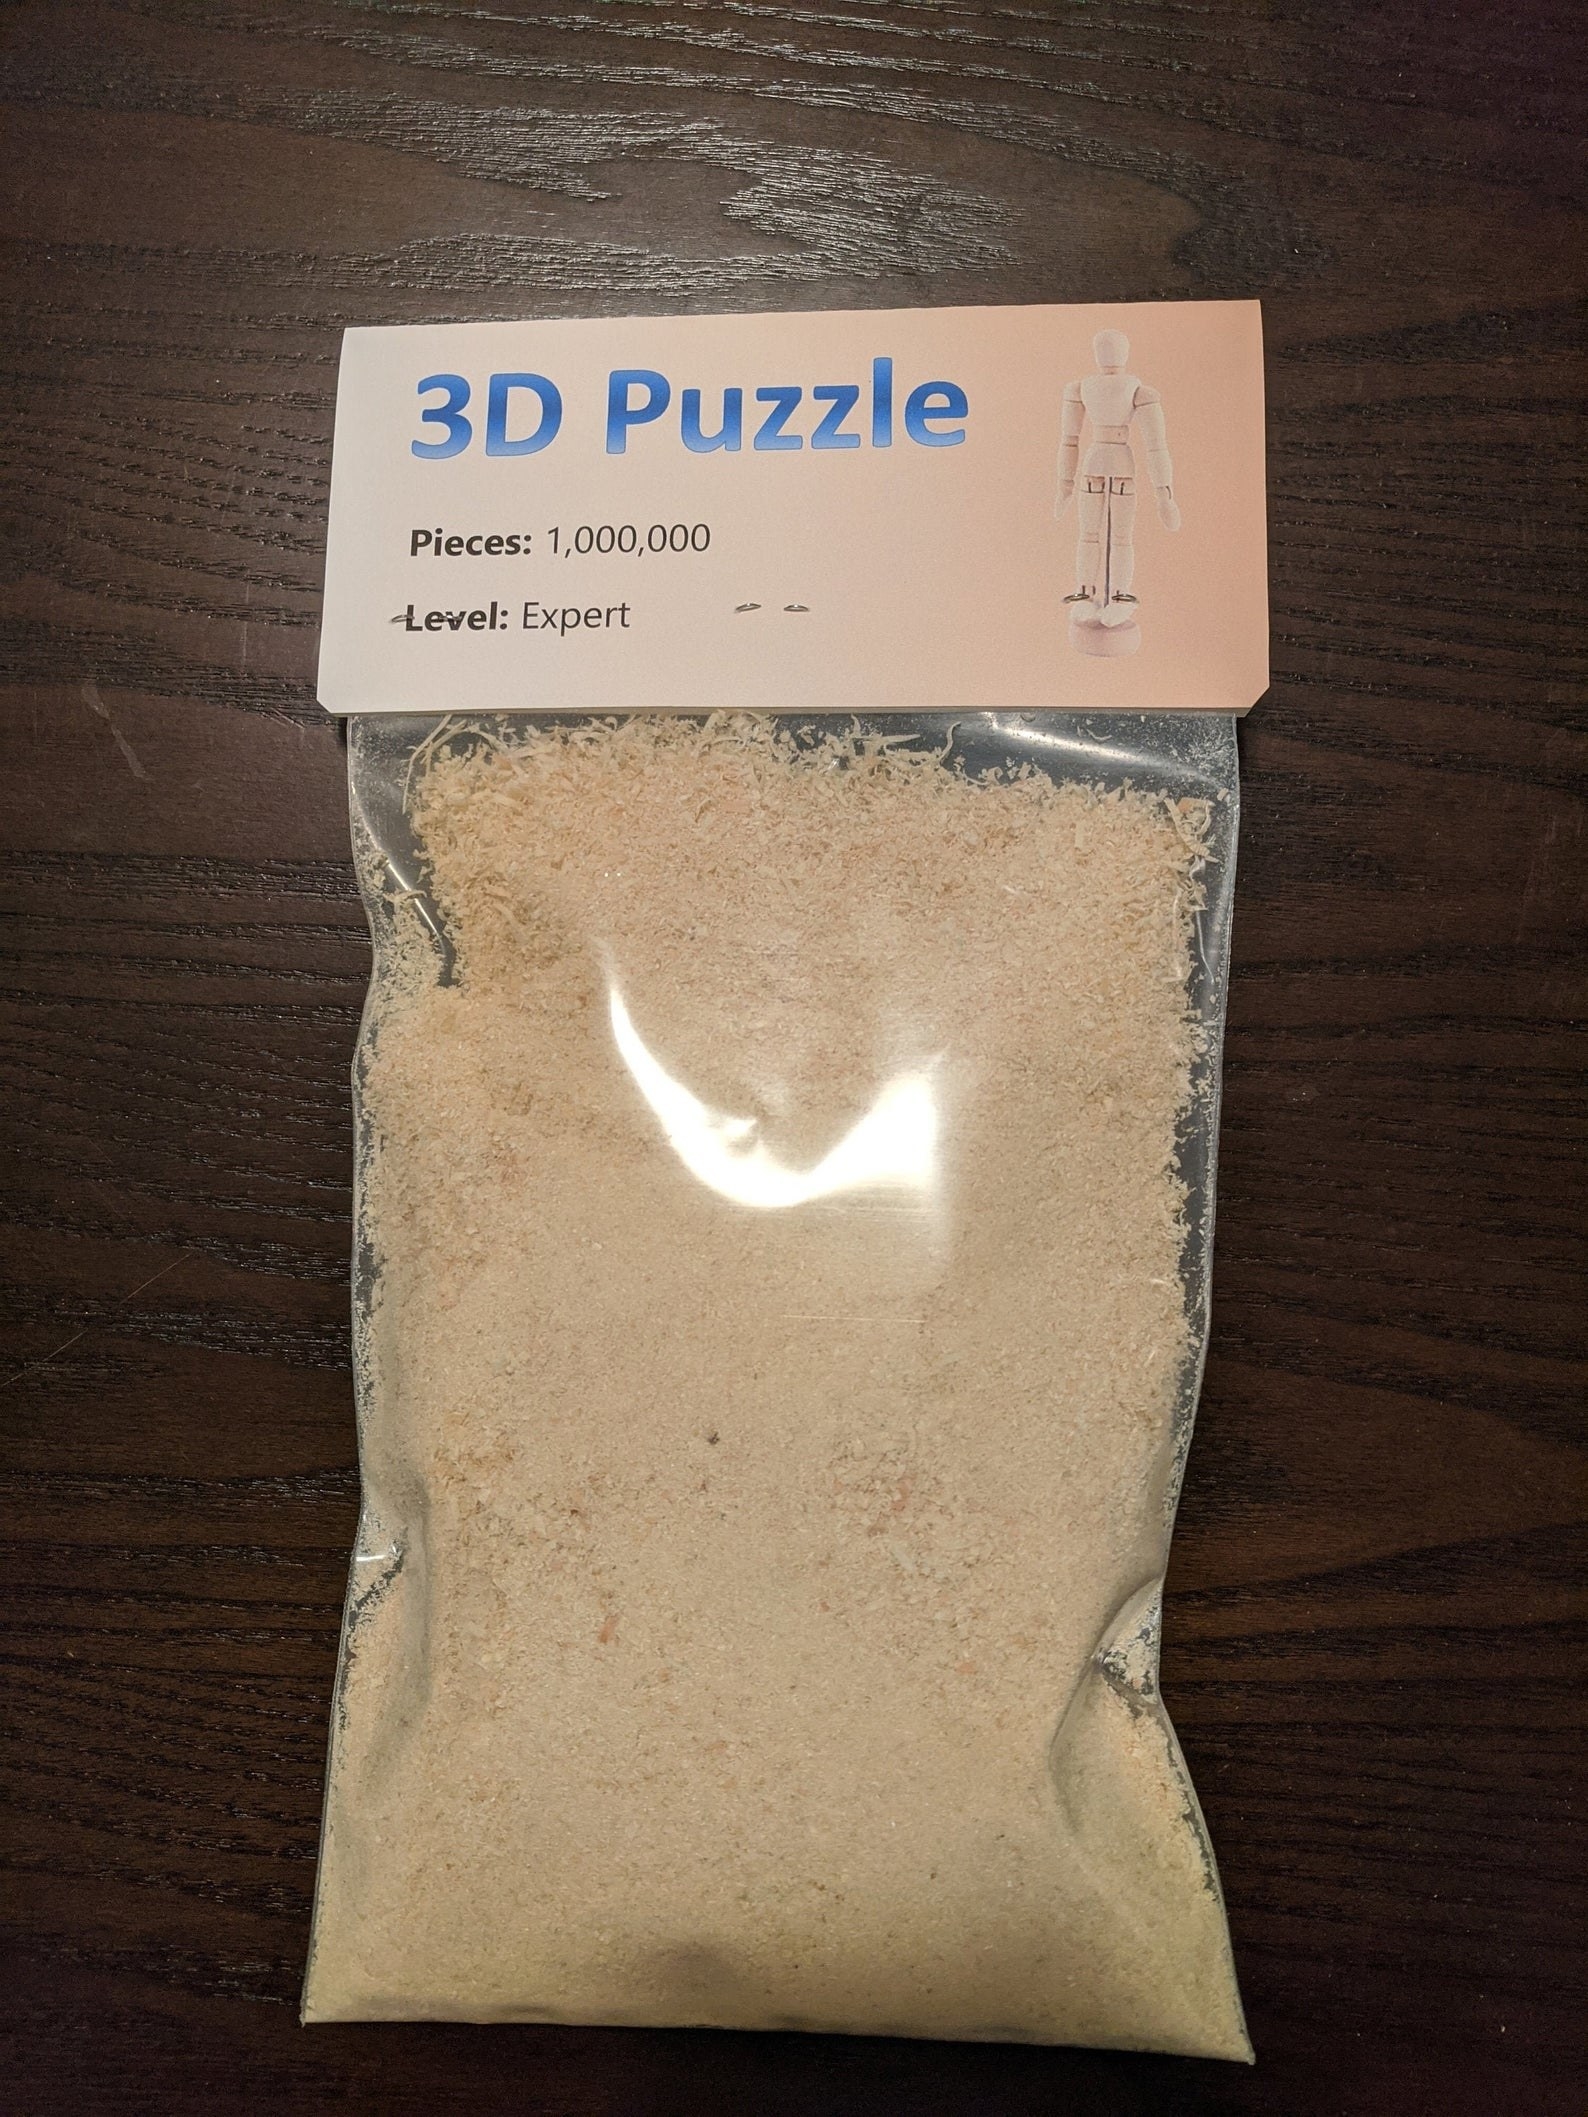 3D puzzle bag of wood shavings